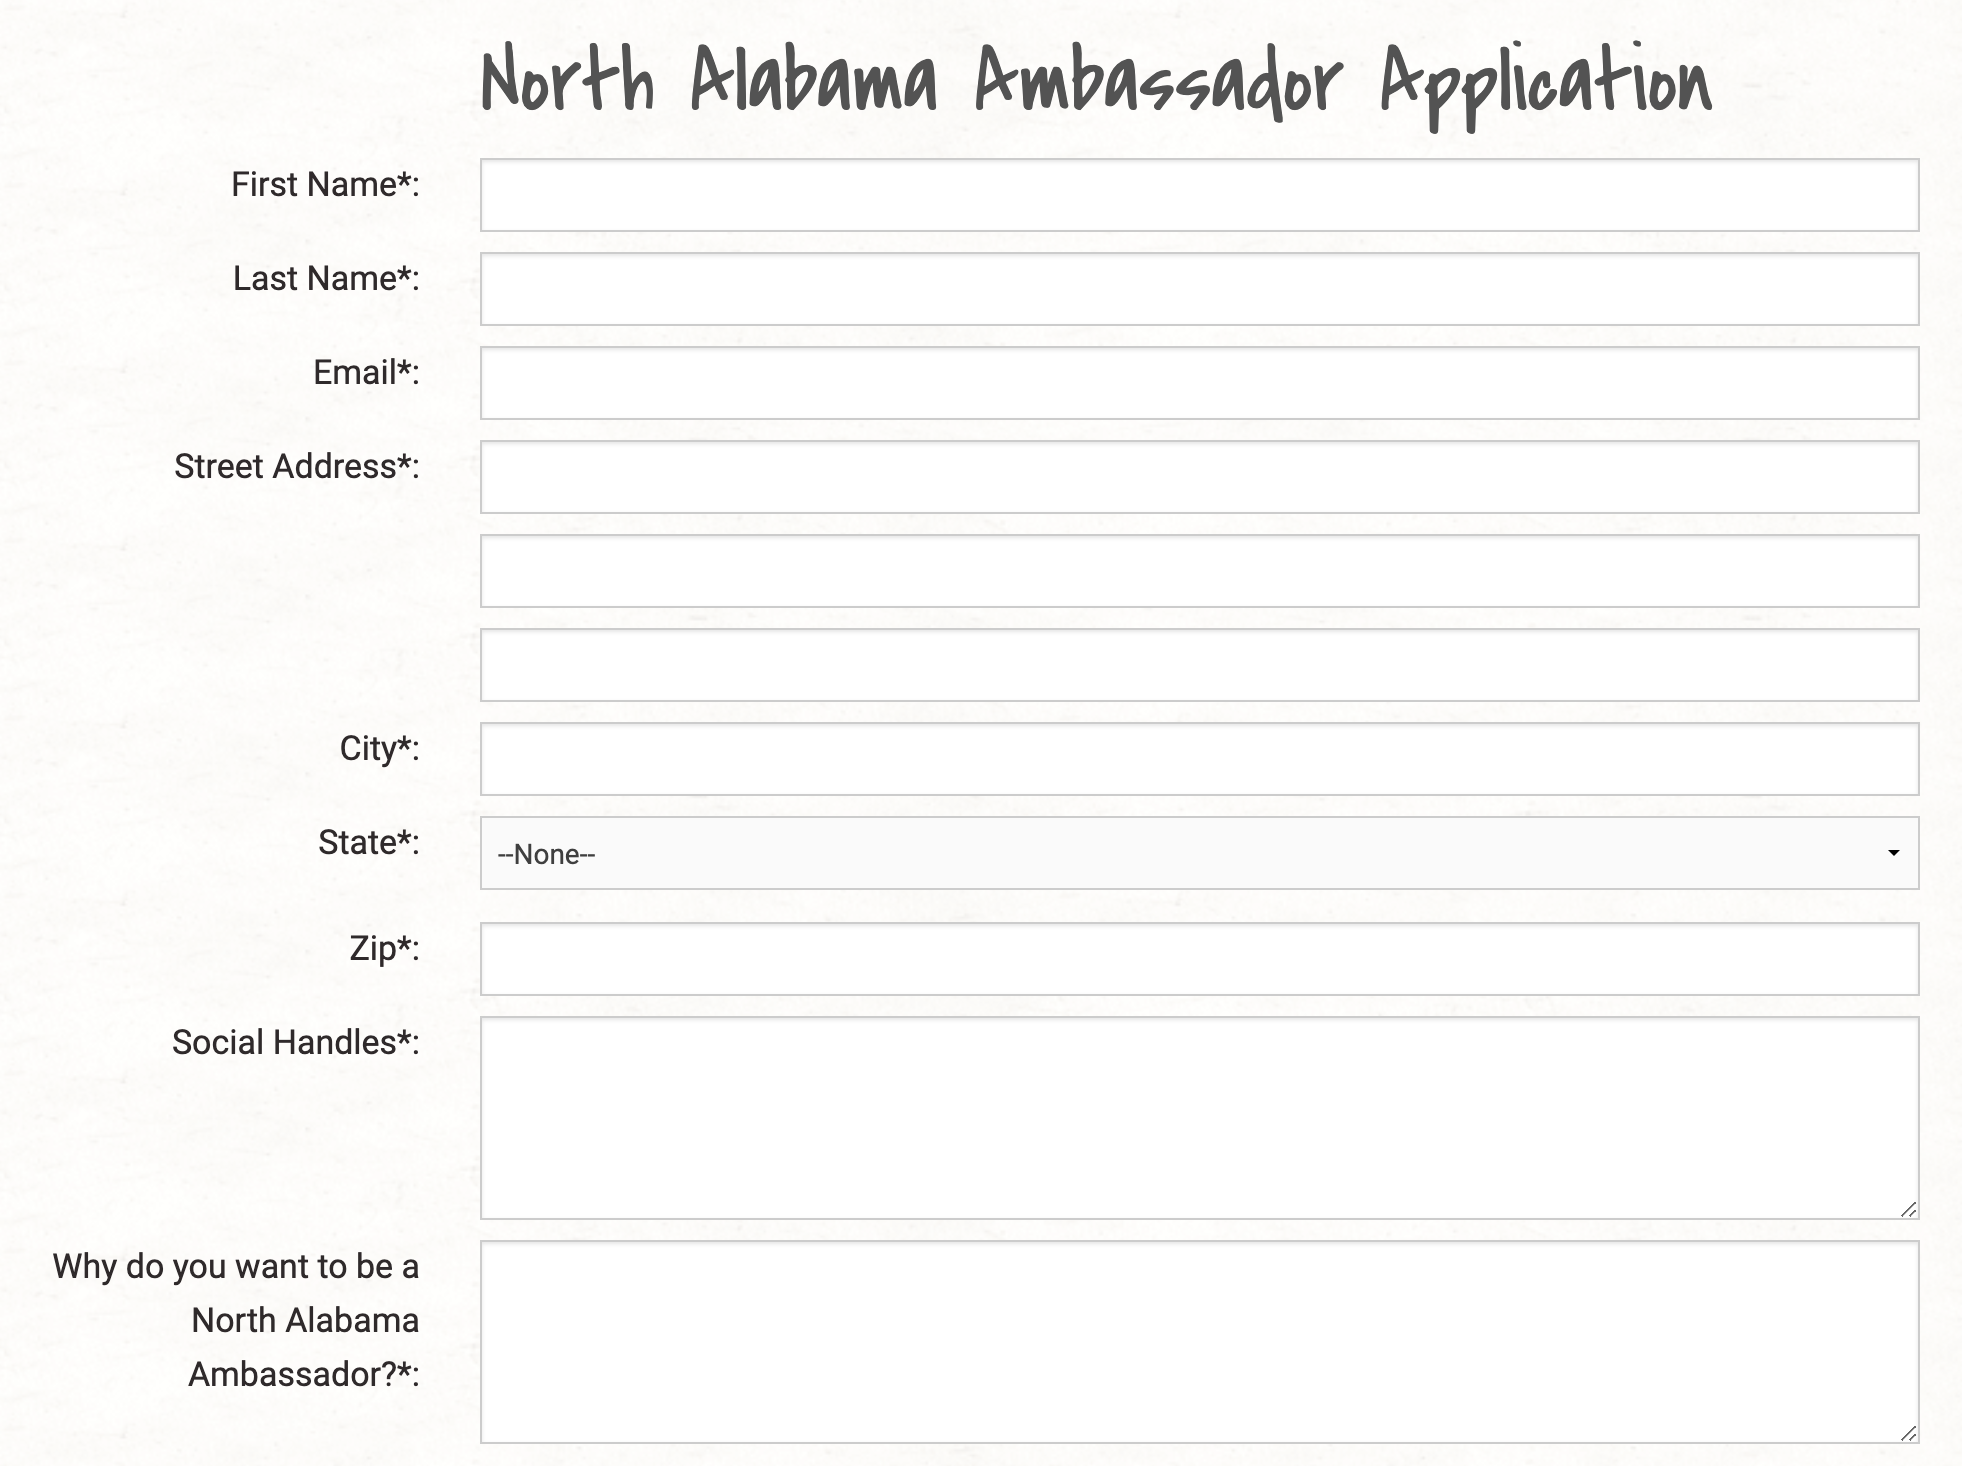 North Alabama Tourism Ambassador Program Application example.